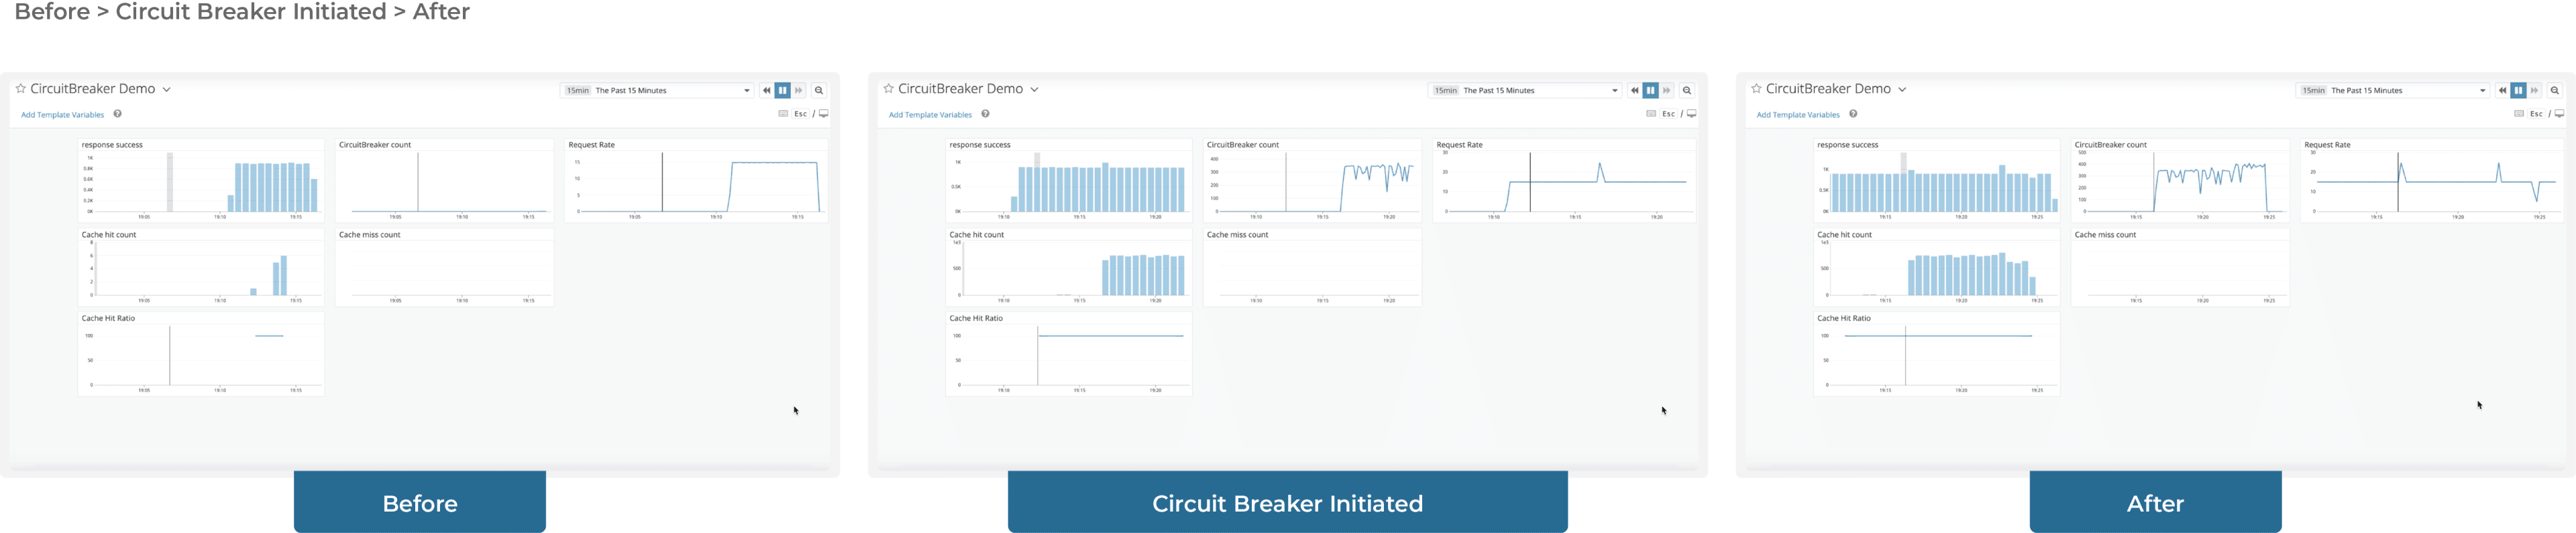 Impact of a Circuit Breaker